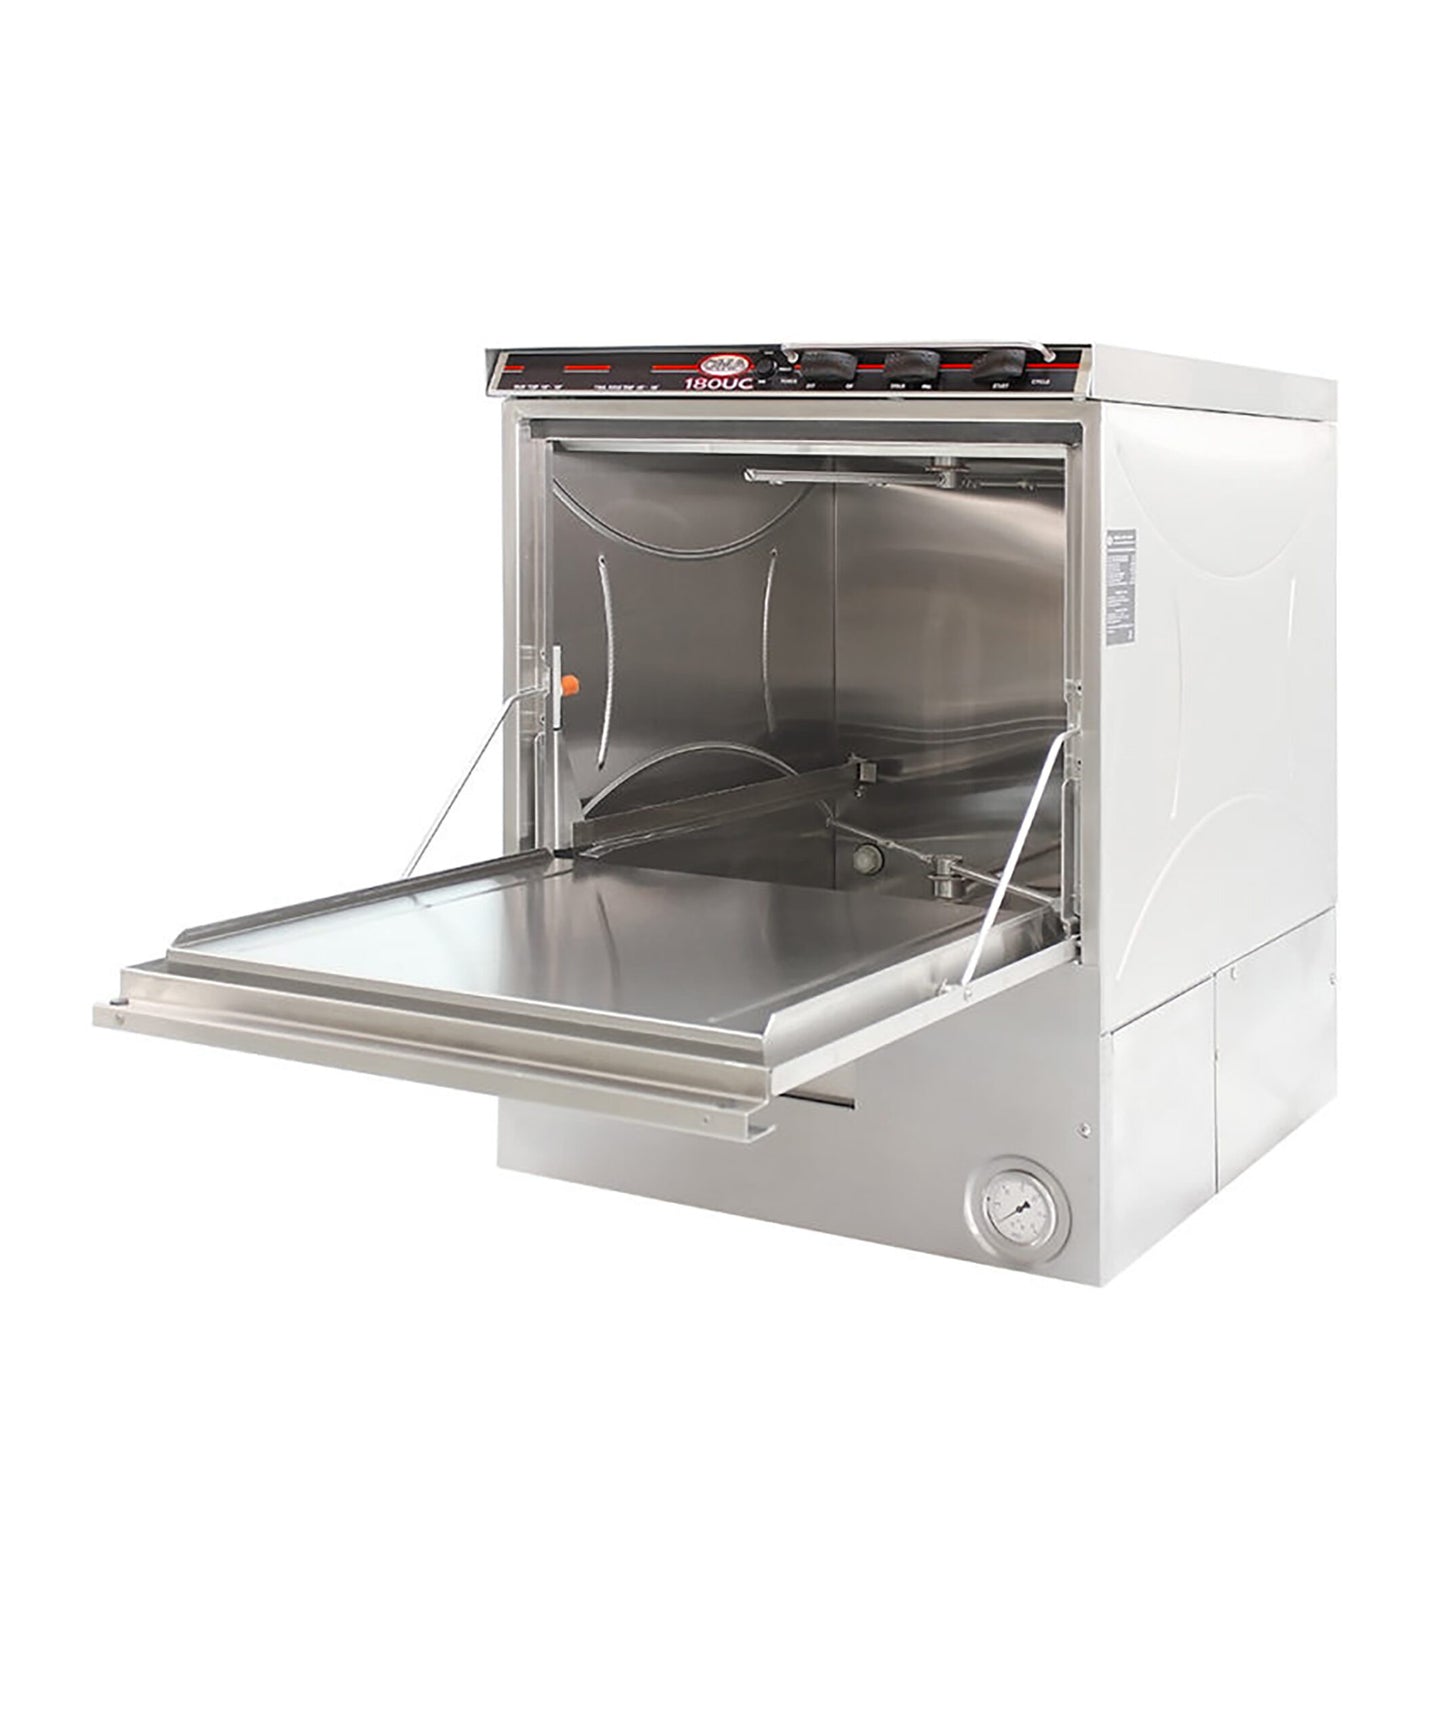 CMA Dishmachines 180UC High Temp Undercounter Dishwasher 220V/60Hz/1Ph w/Dispenser